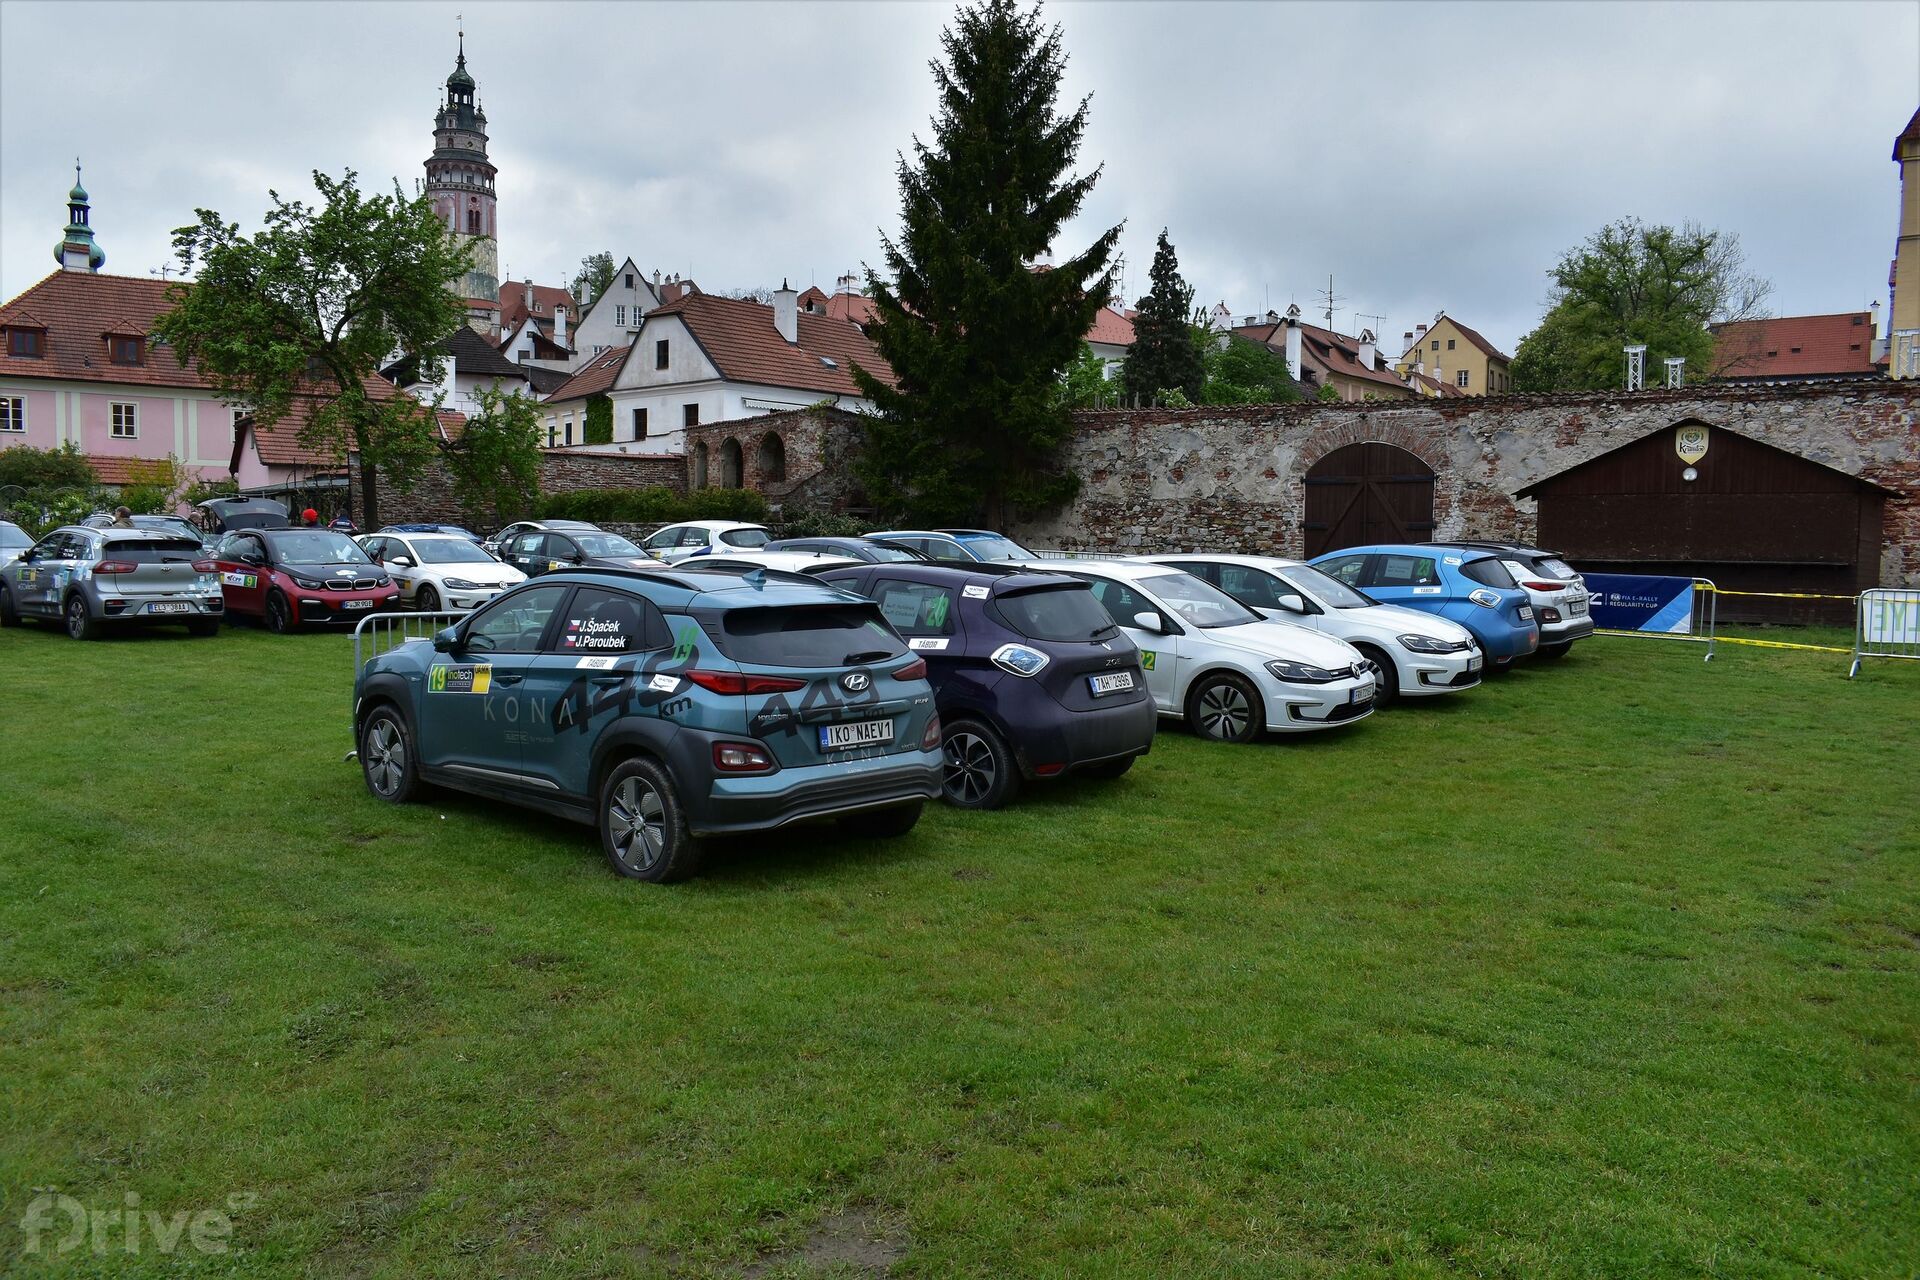 Czech New Energies Rally 2019